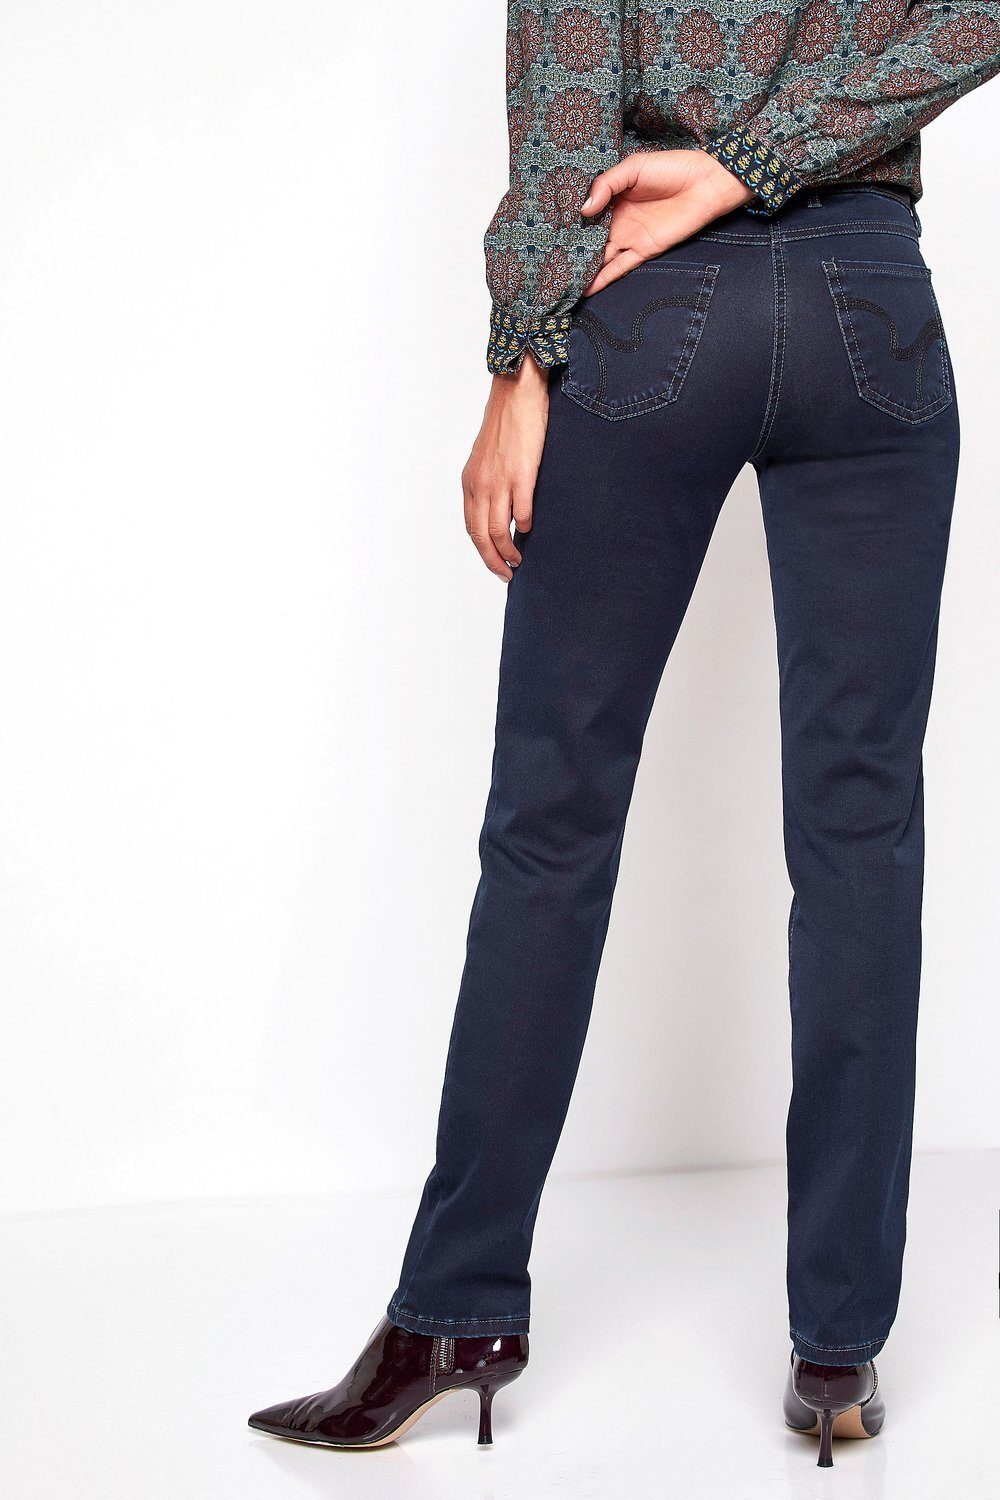 TONI 5-Pocket-Jeans Perfect Shape Shaping-Effekt Bauch und darkblue 058 mit - Po an